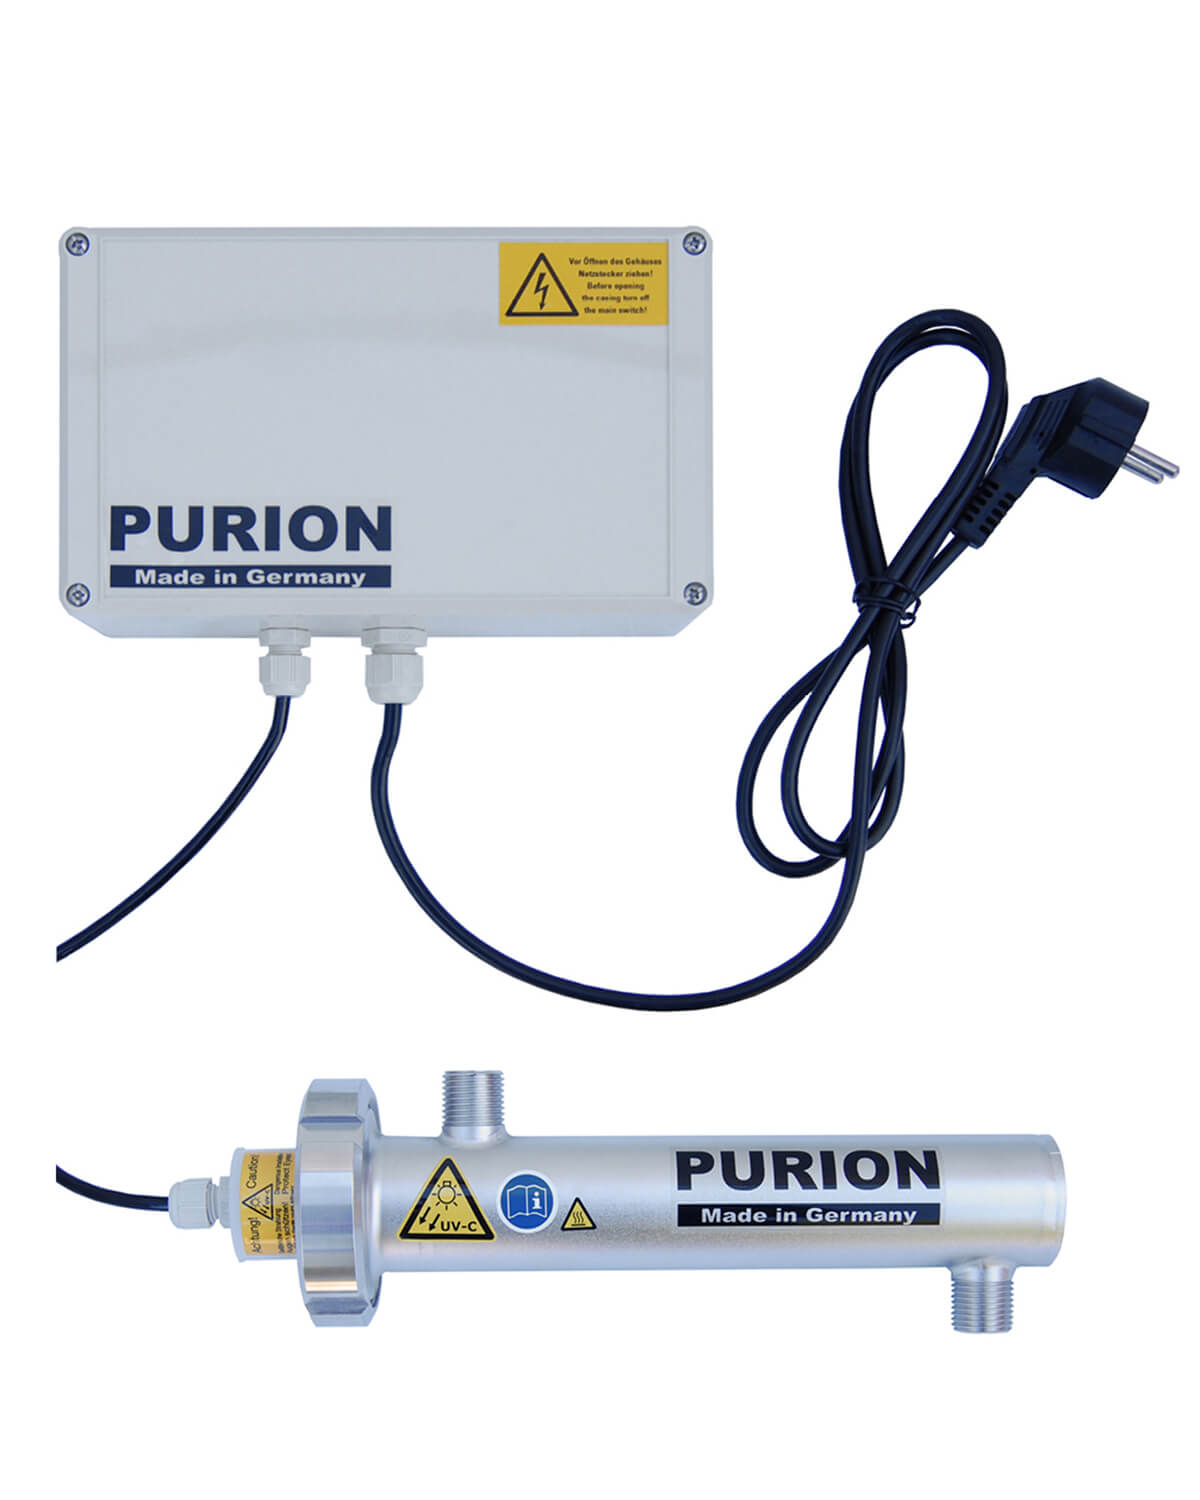 PURION 400 110 - 240 V AC Basic